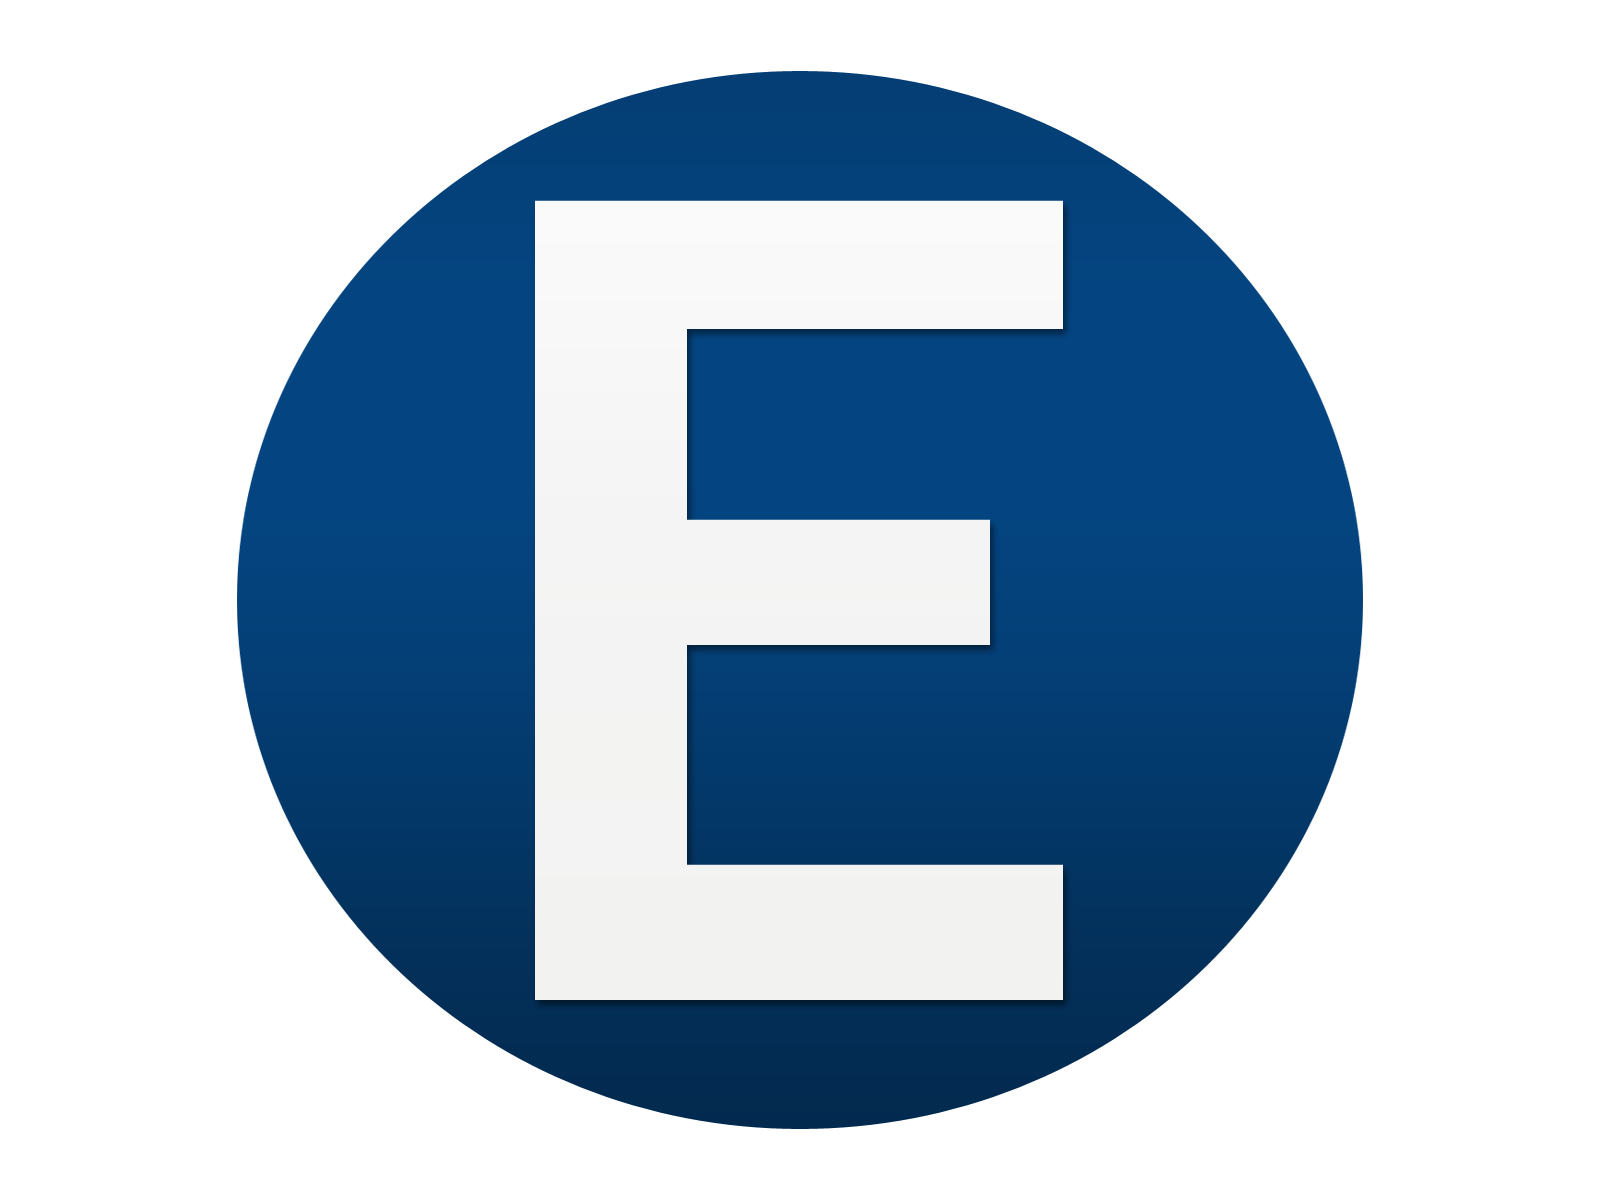 Blue E Logo - Blue White Letter E Logo Design PNG « Free To Use Images & Photos ...